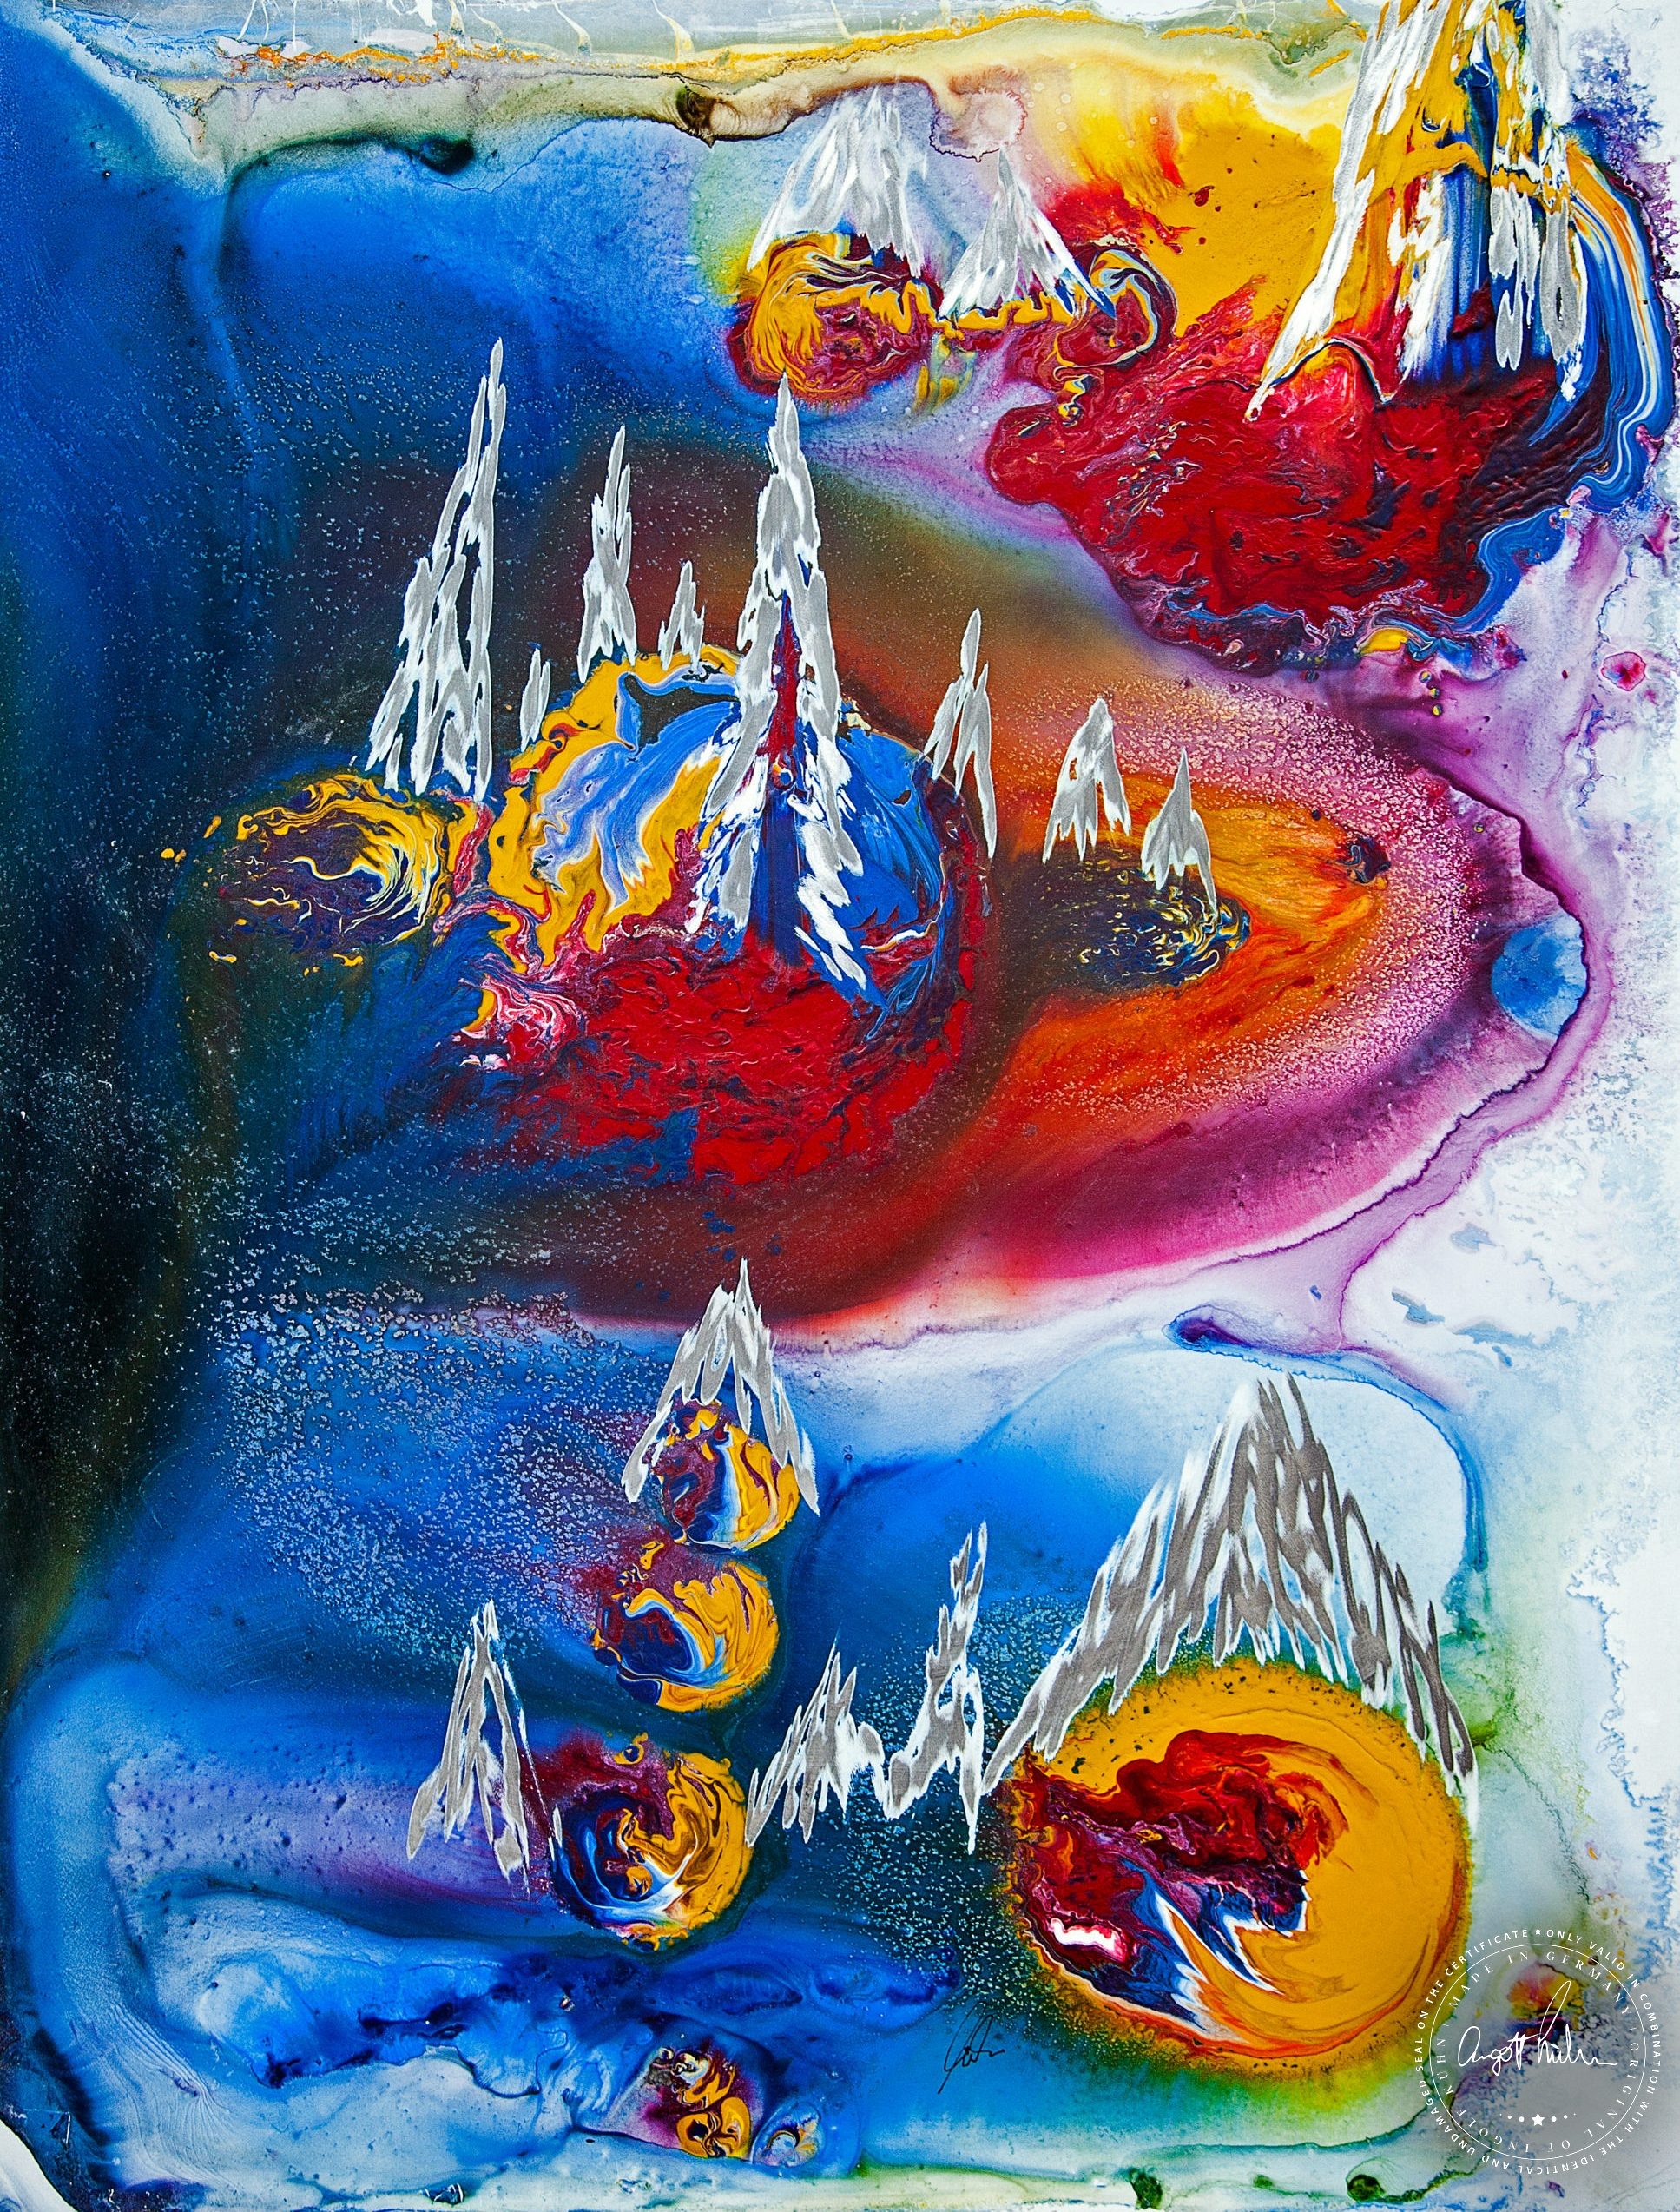 Artwork by Ingolf Kühn Valley of Colors Art-No 11004 acrylic on dibond 100x120 2018